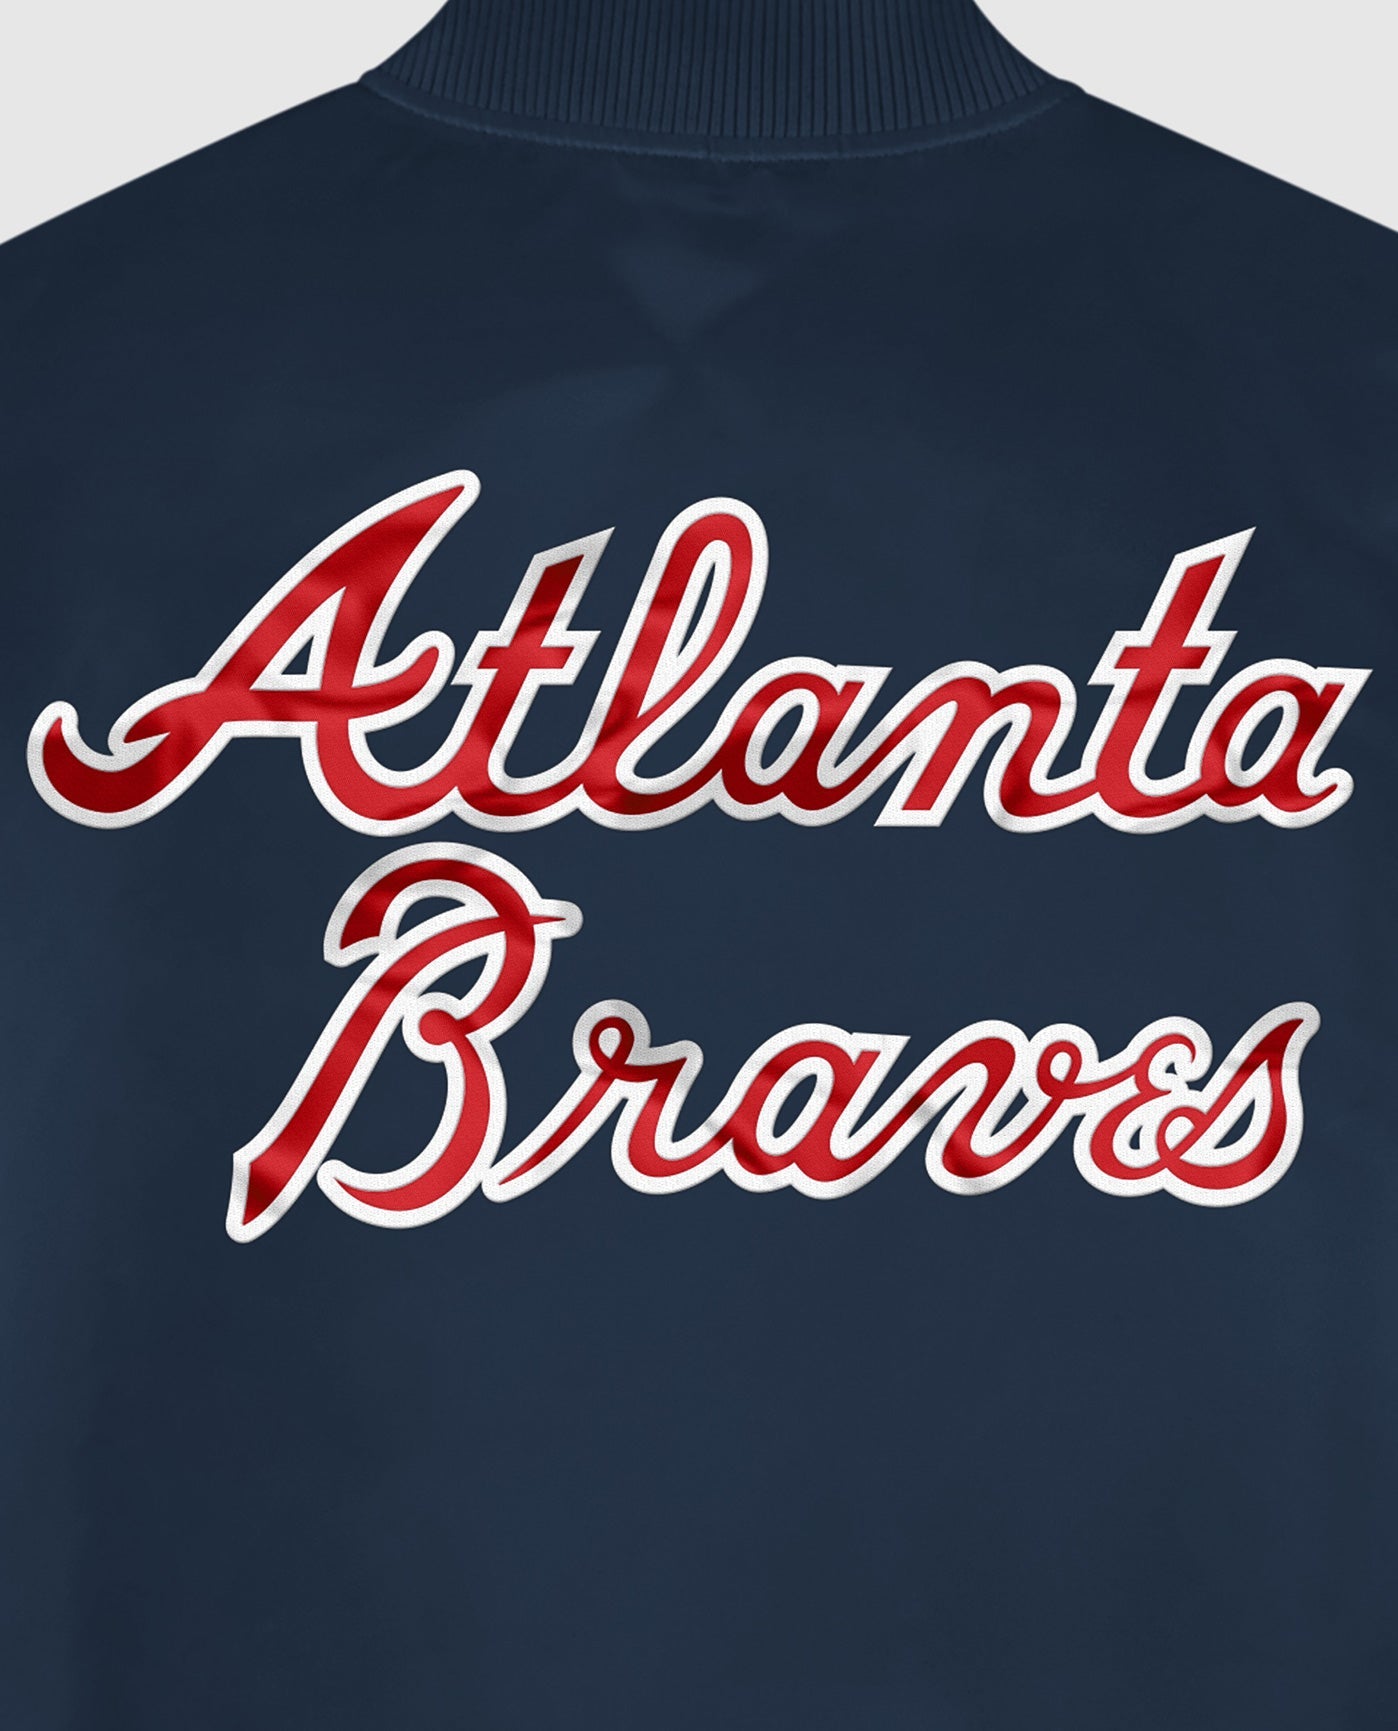 Men's Atlanta Braves Starter Navy Patch Full-Snap Jacket